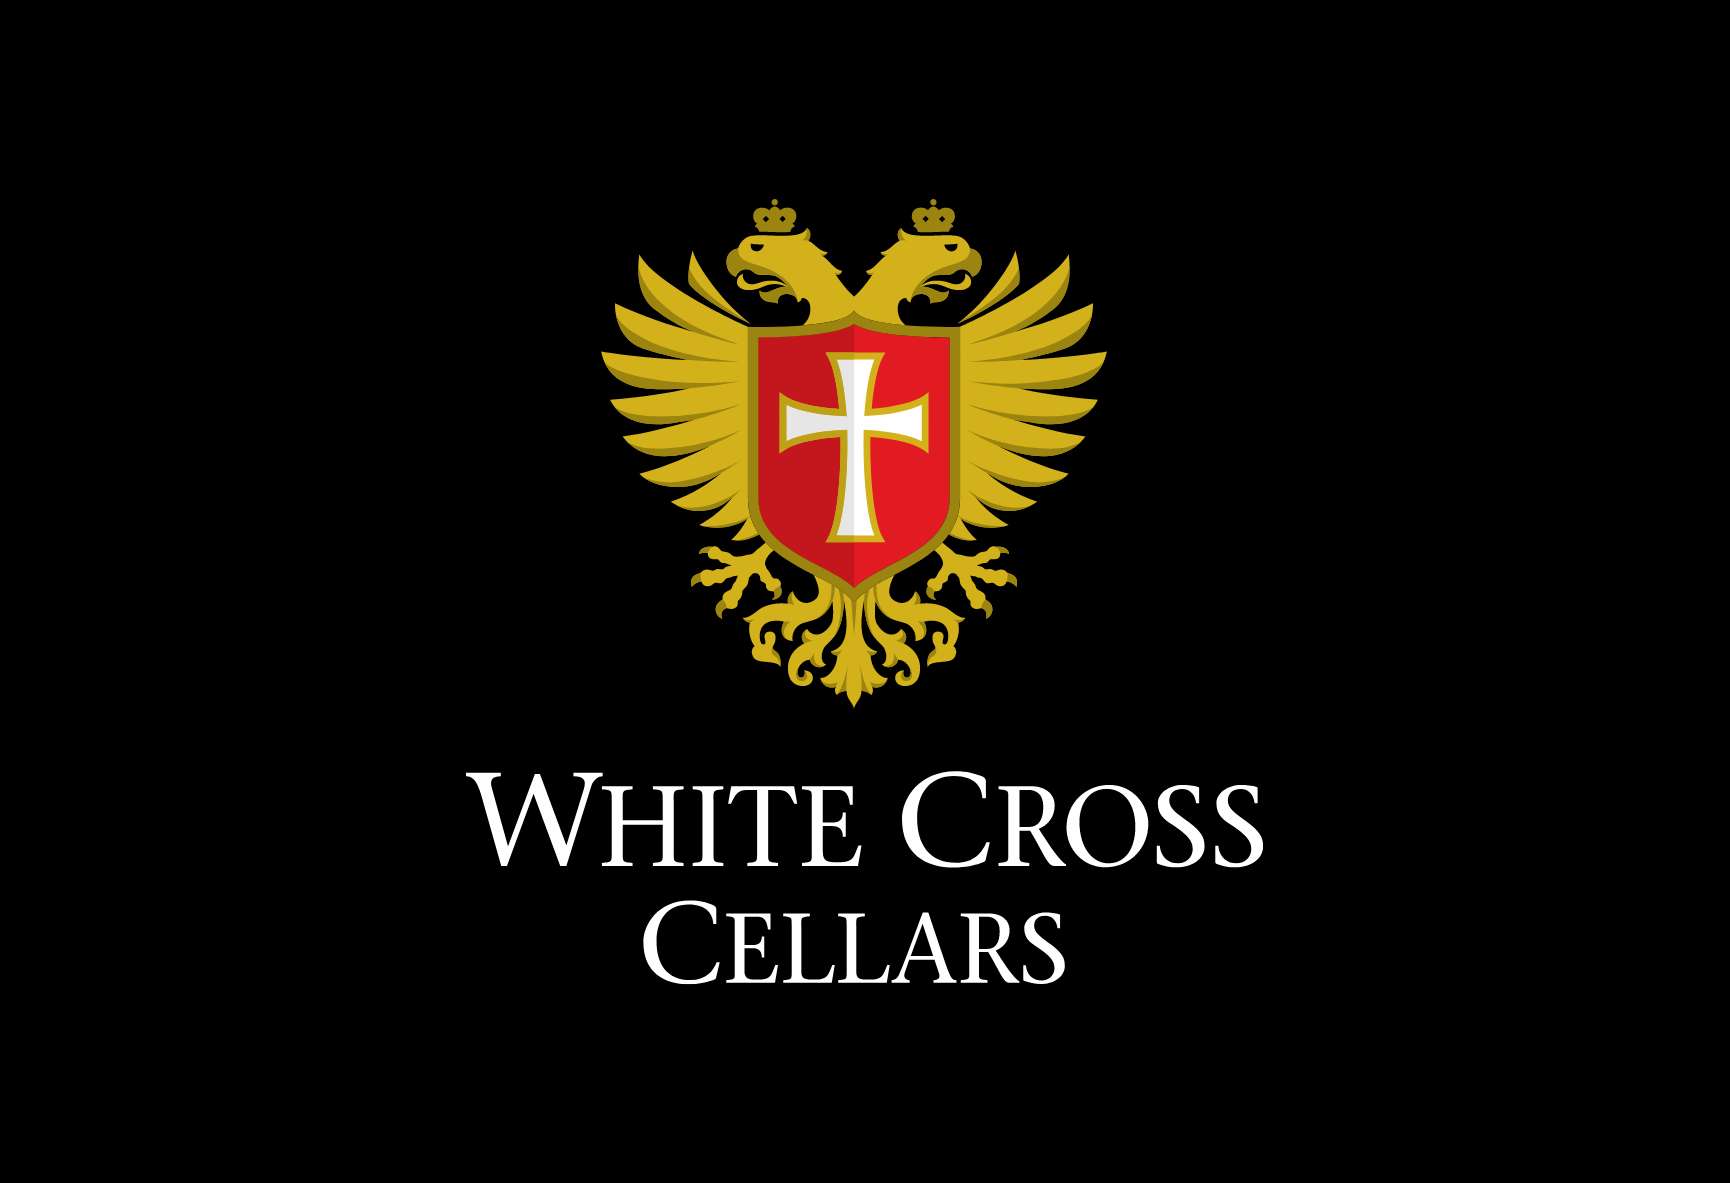 White Cross Cellars logo on a black background